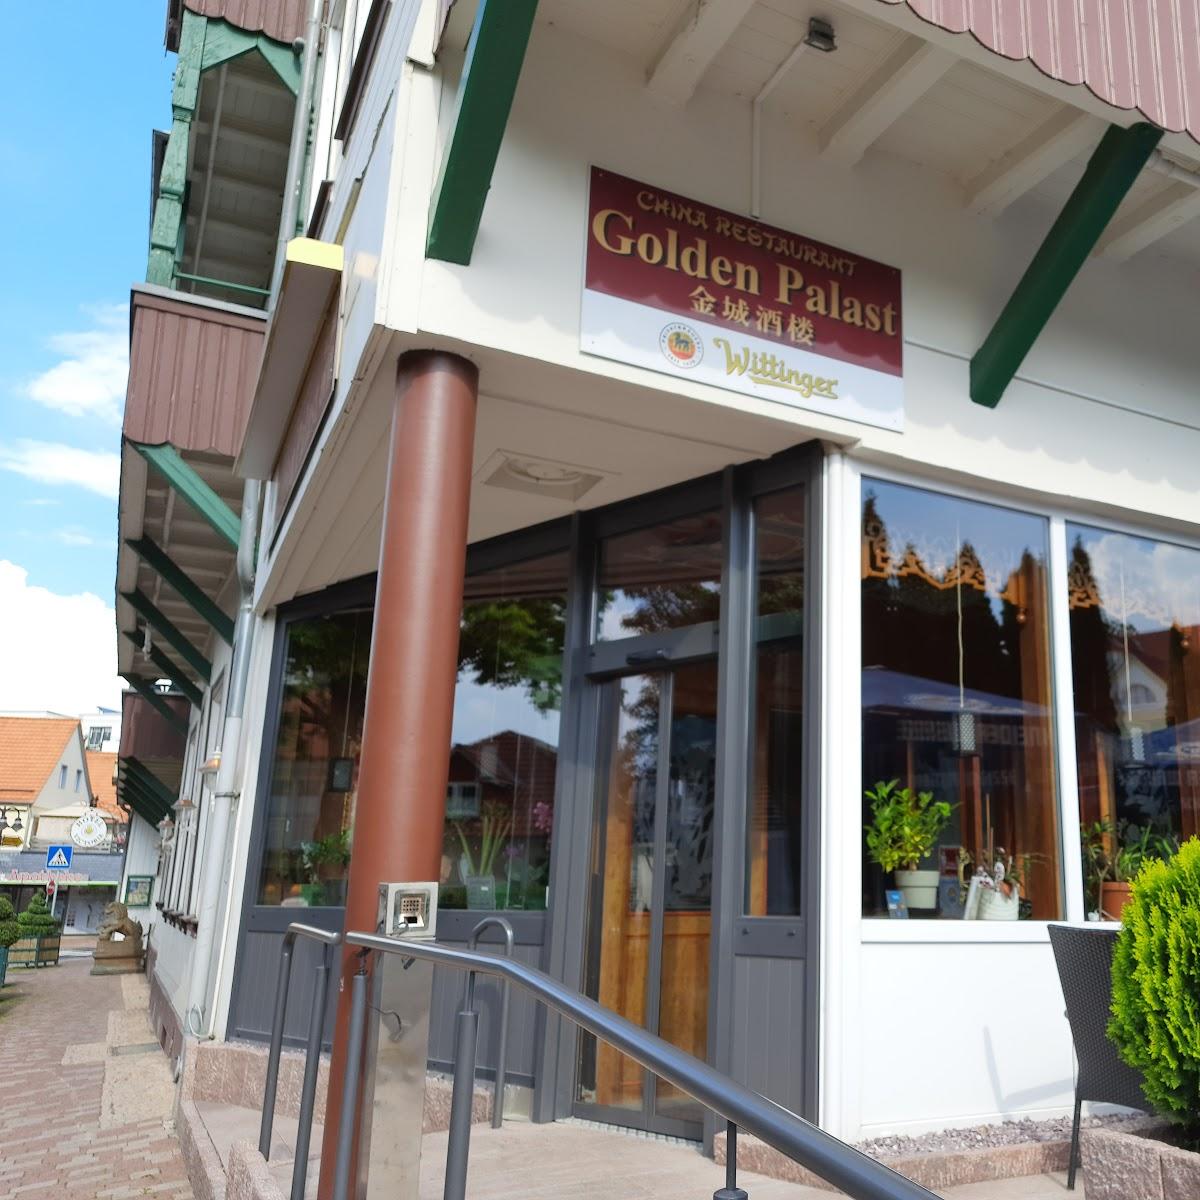 Restaurant "Golden Palast" in Bad Harzburg